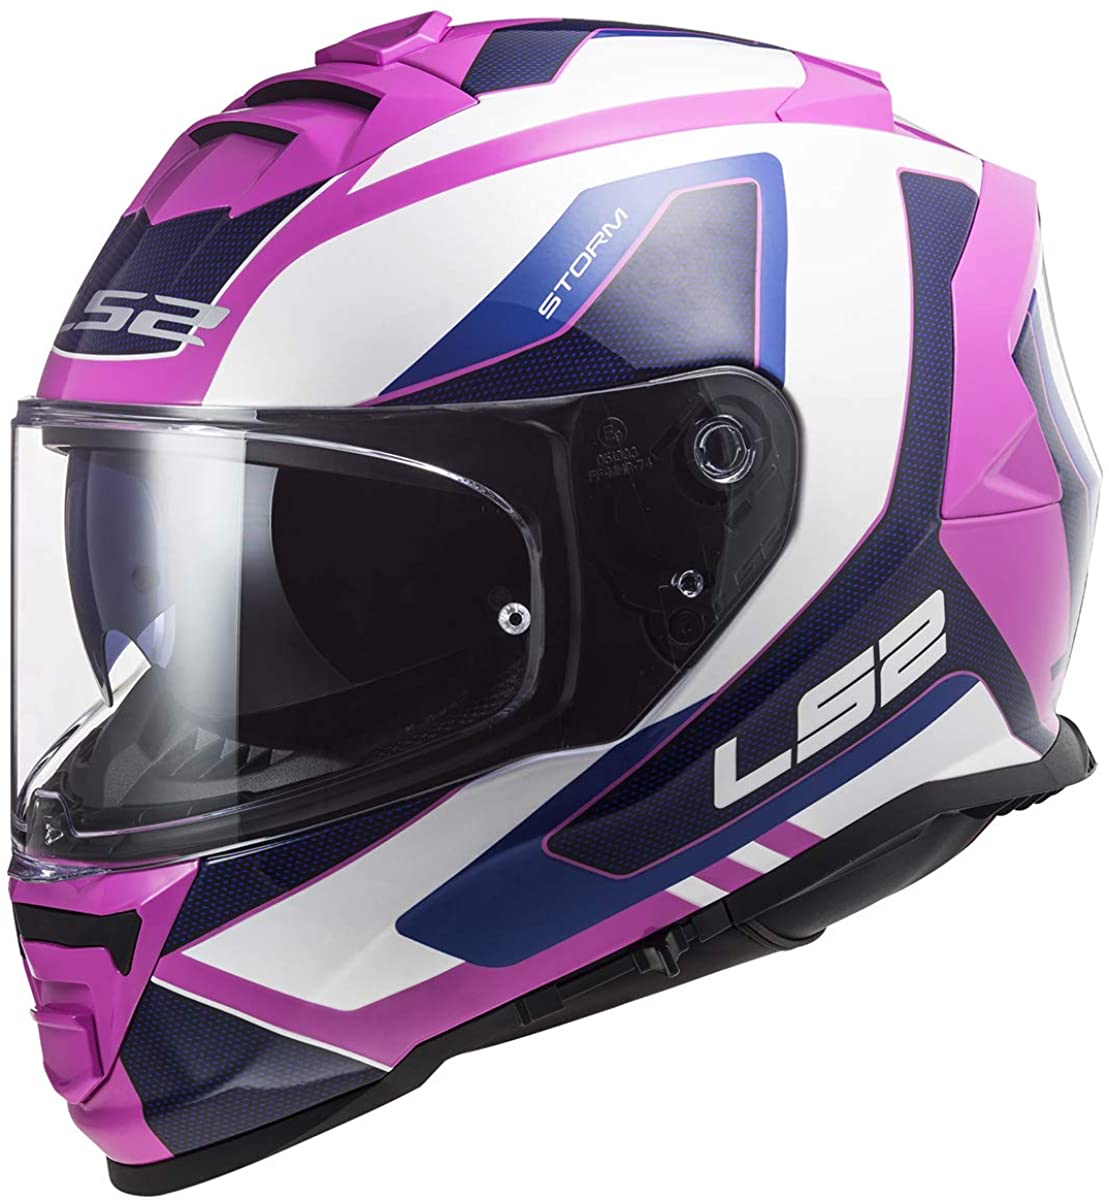 Buy LS2 Helmets Assault Techy Full Face Motorcycle Helmet W/SunShield  (Gloss White/Pink - X-Small) Online in Taiwan. B08JQNJF4D